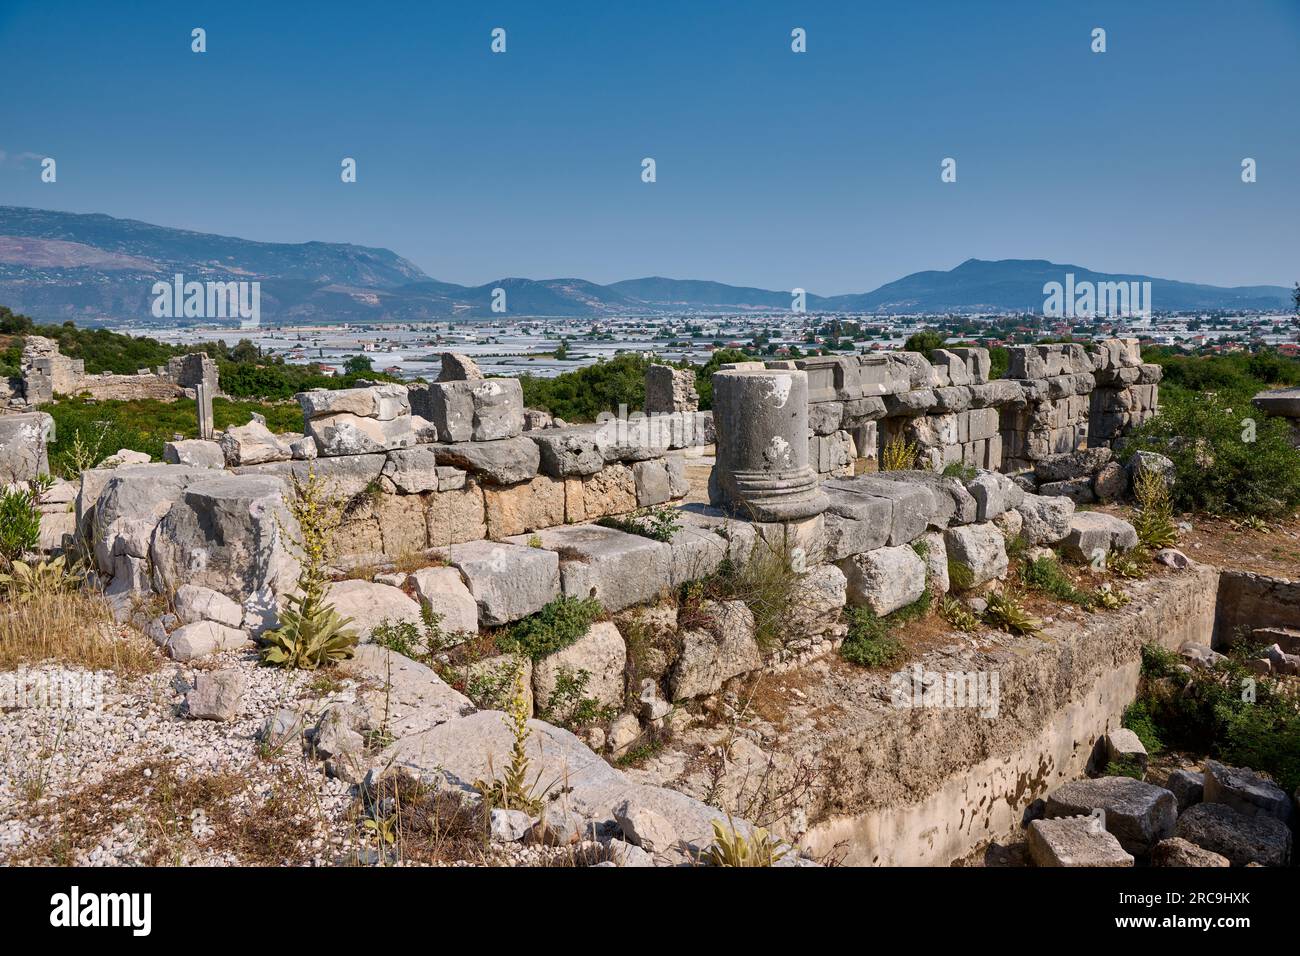 Ruinen der Kathedrale im antiken Xanthos, Tuerkei |rovine della cattedrale nell'antica Xanthos, Turchia| Foto Stock